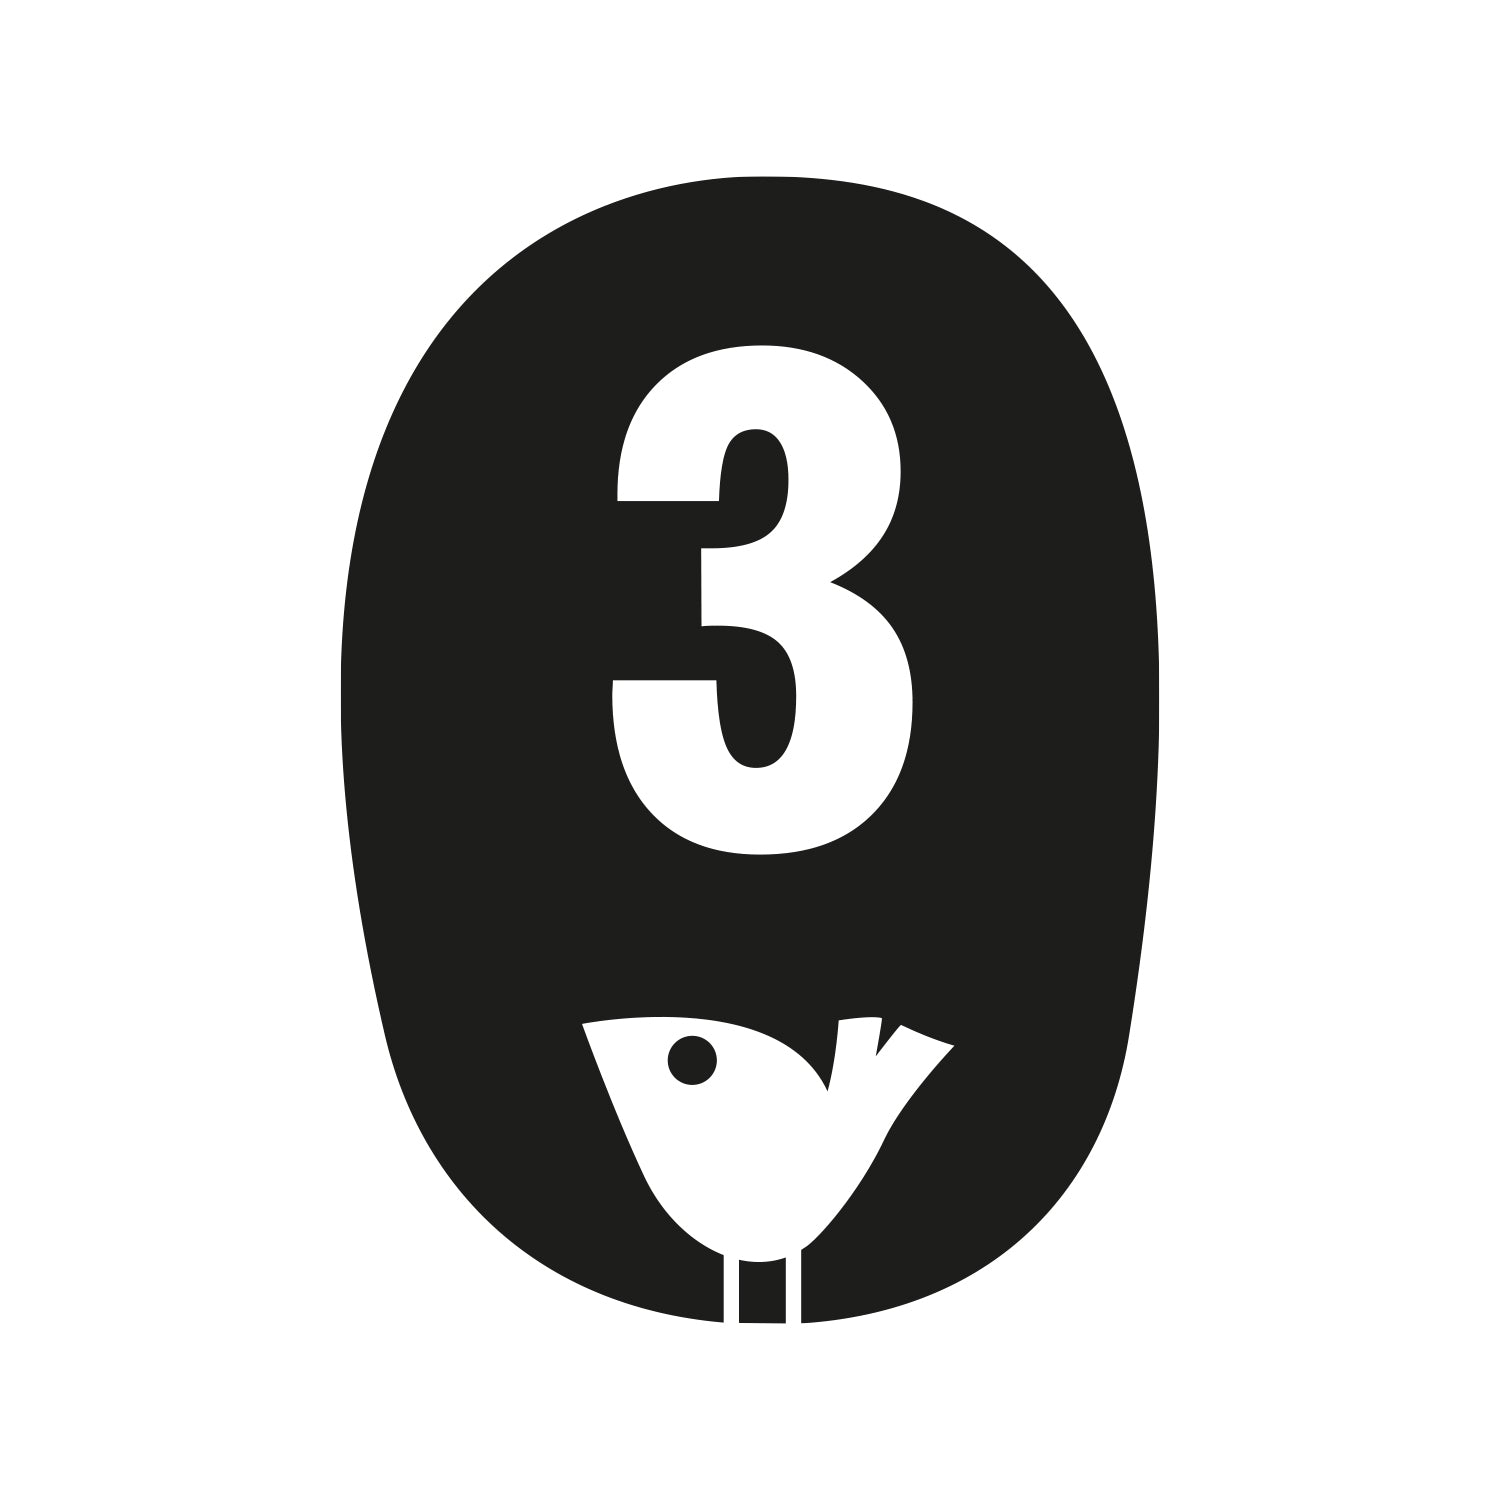 Chirpy Bird Oval House Number - Stencil Film